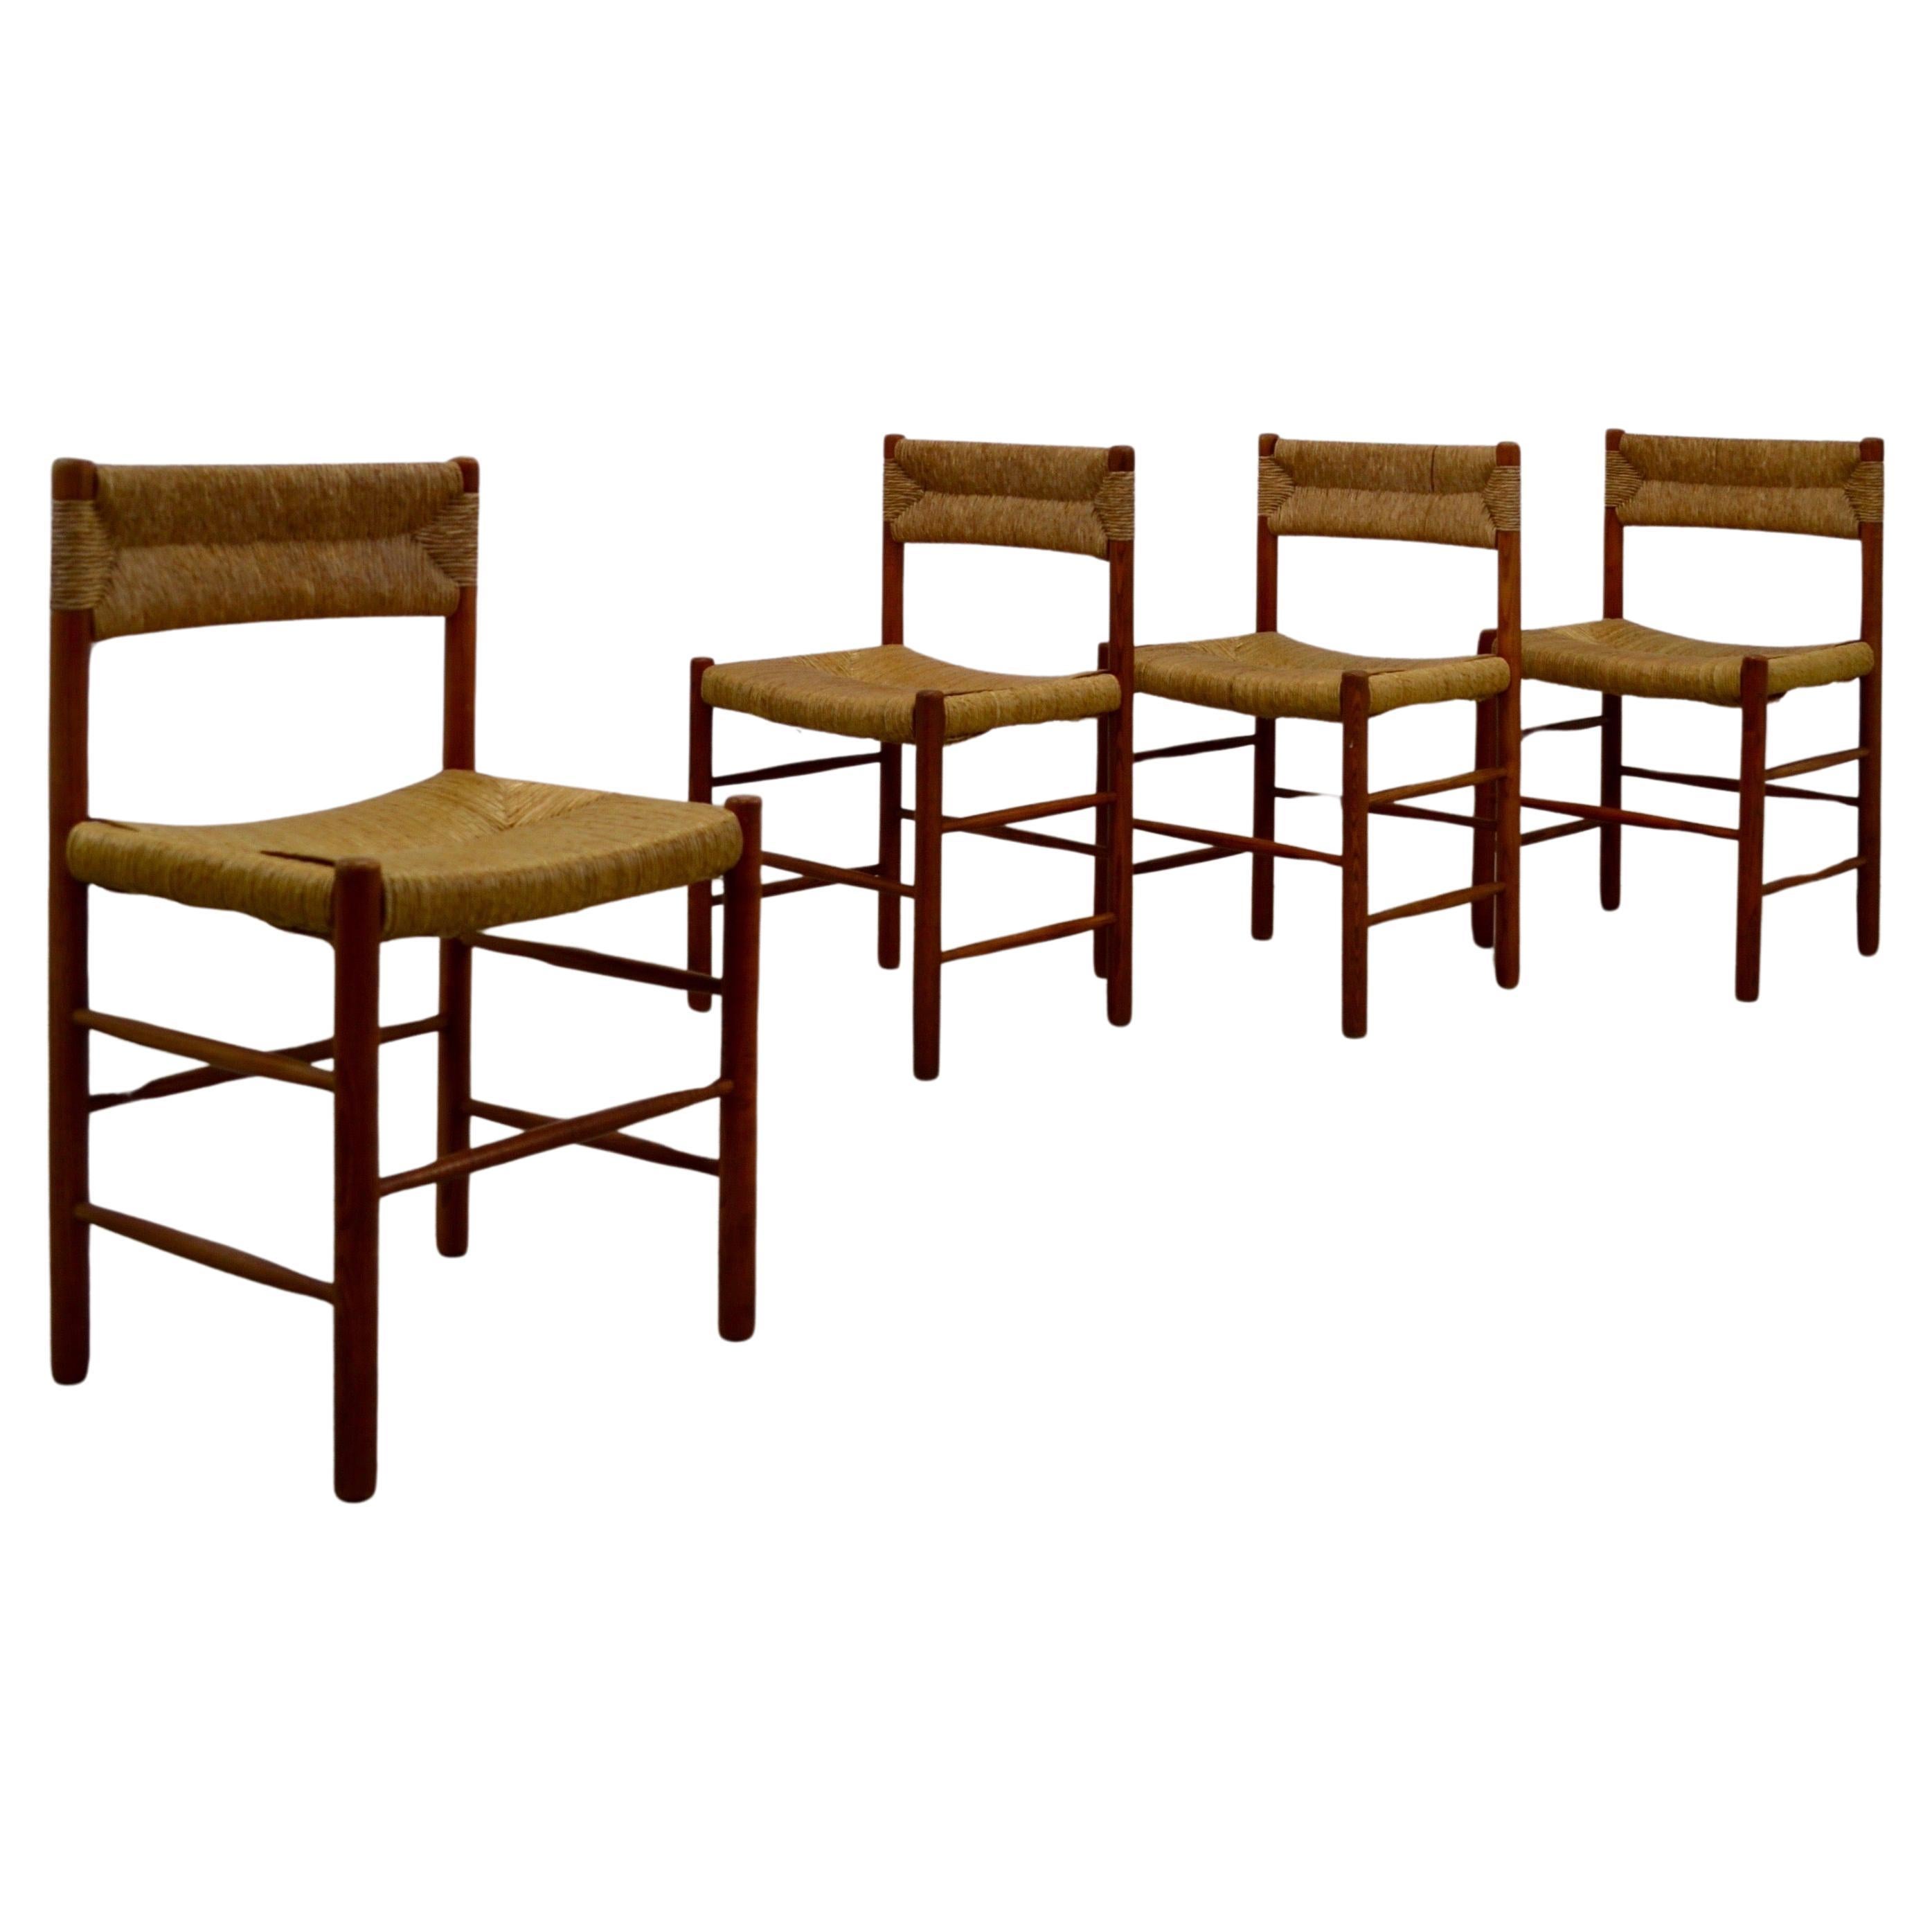 4 Robert Sentou Dordogne Chairs for Charlotte Perriand - 1950